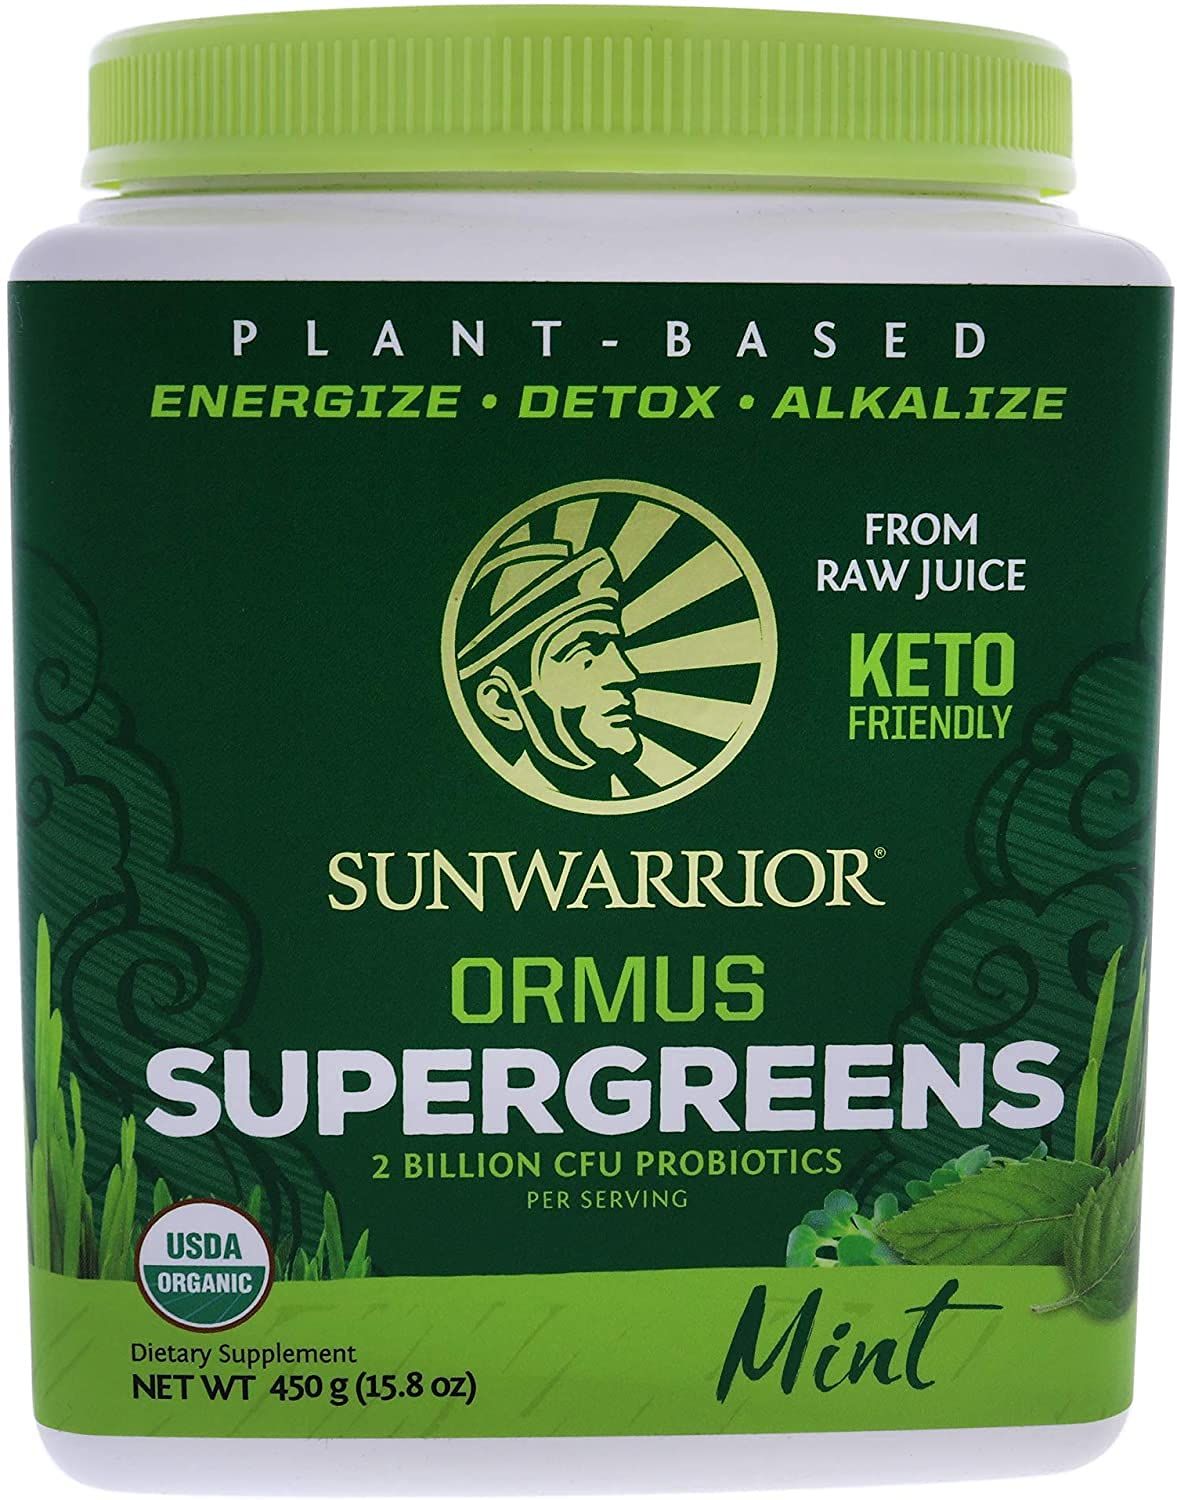 Sunwarrior Ormus Supergreens Mint Image